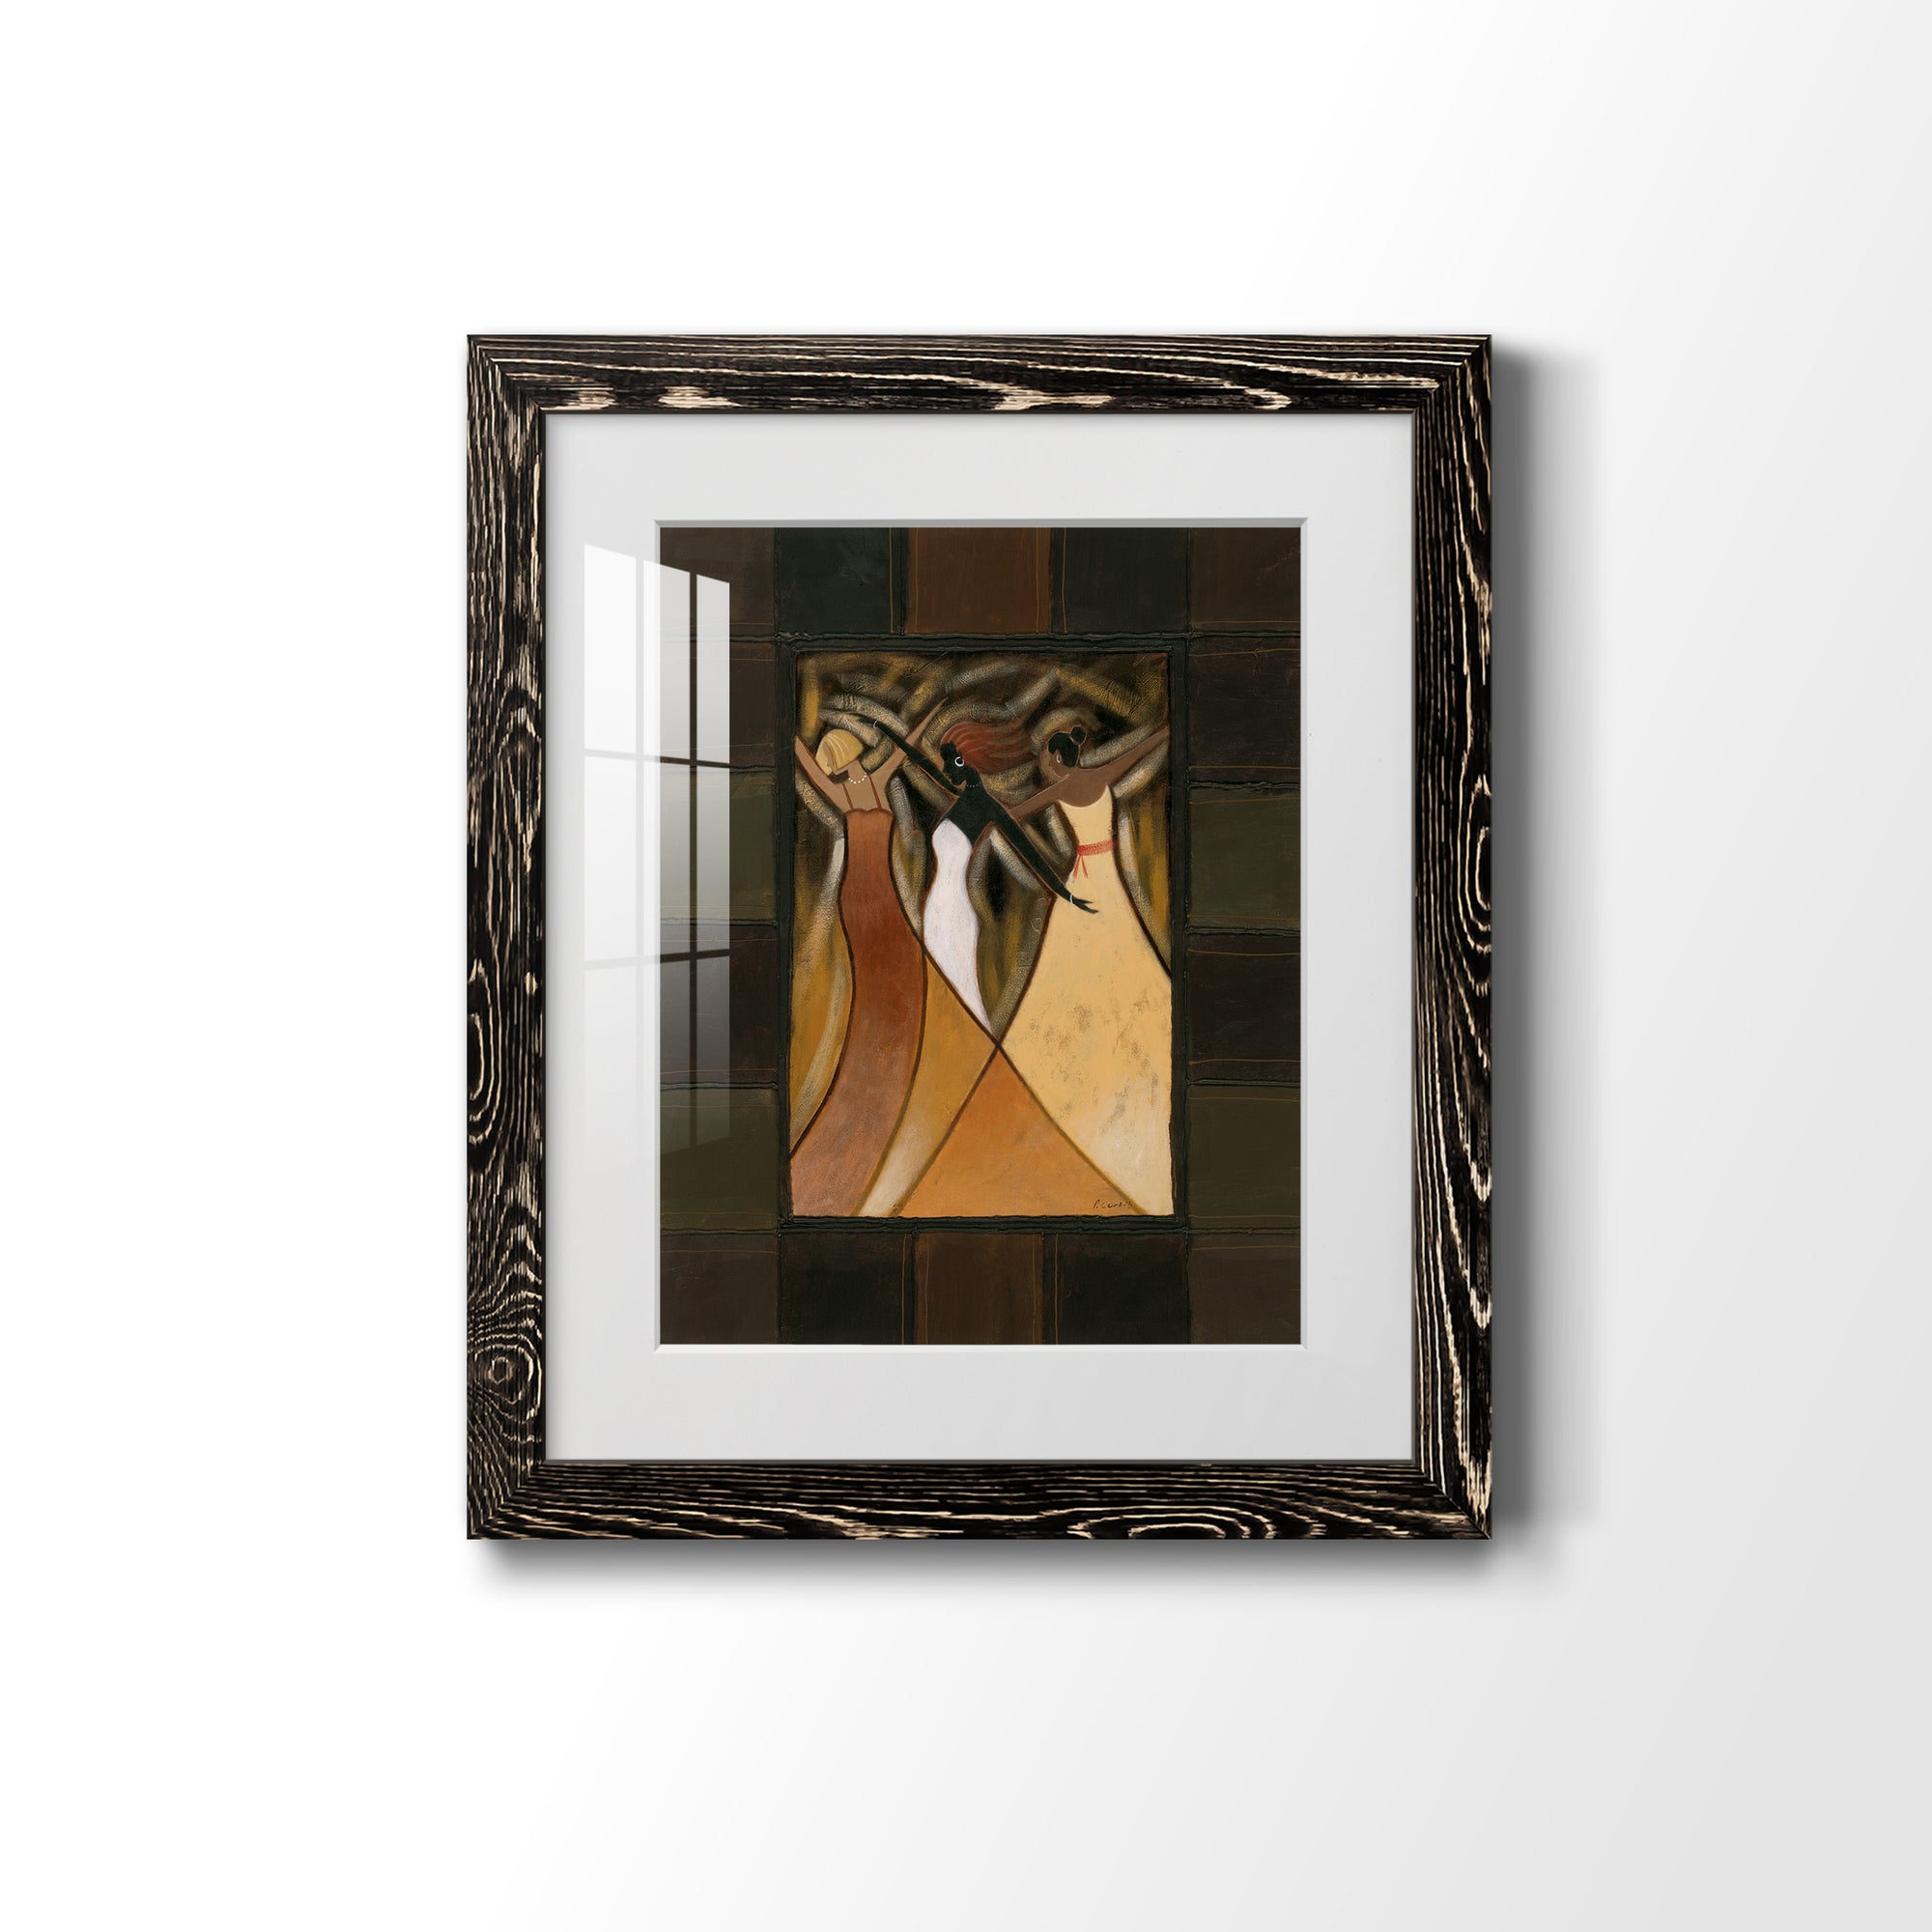 Divine Grace II - Premium Framed Print - Distressed Barnwood Frame - Ready to Hang